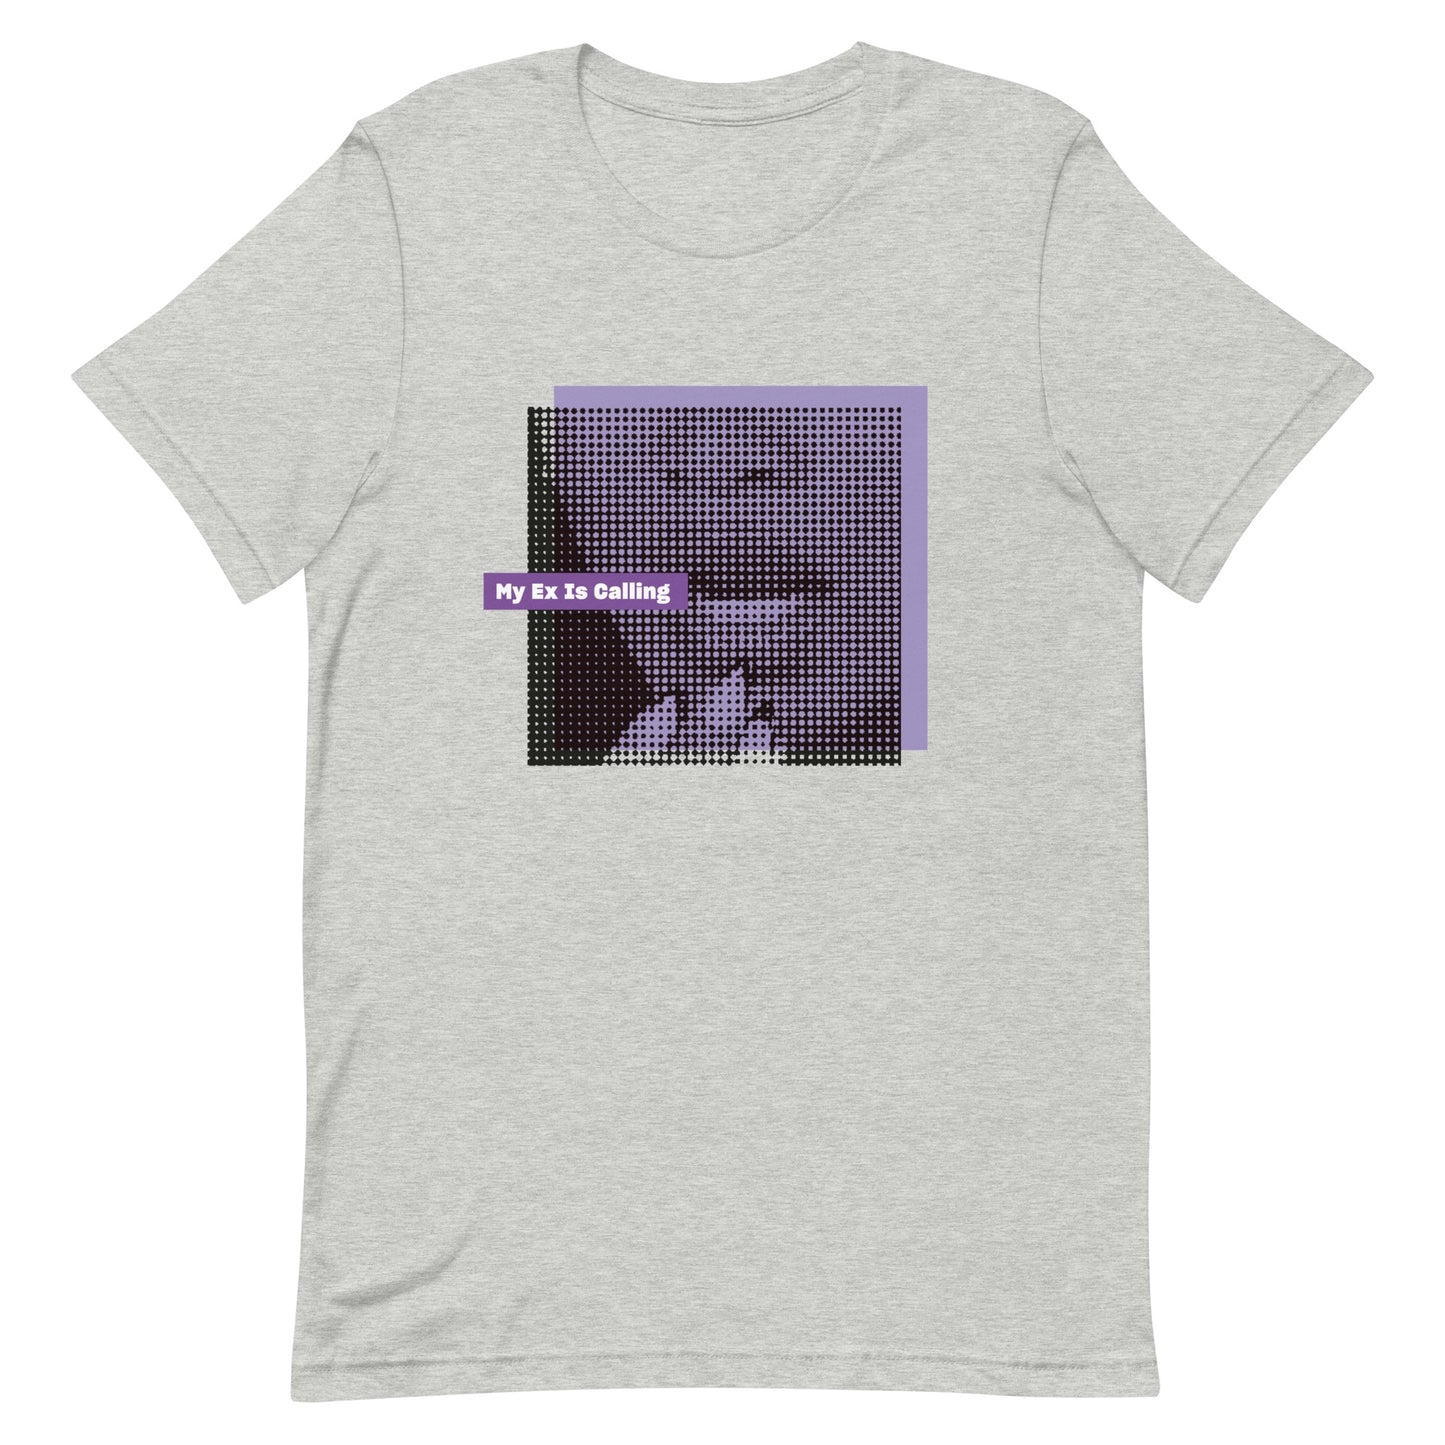 Keke Palmer "My Ex Is Calling" T-Shirt